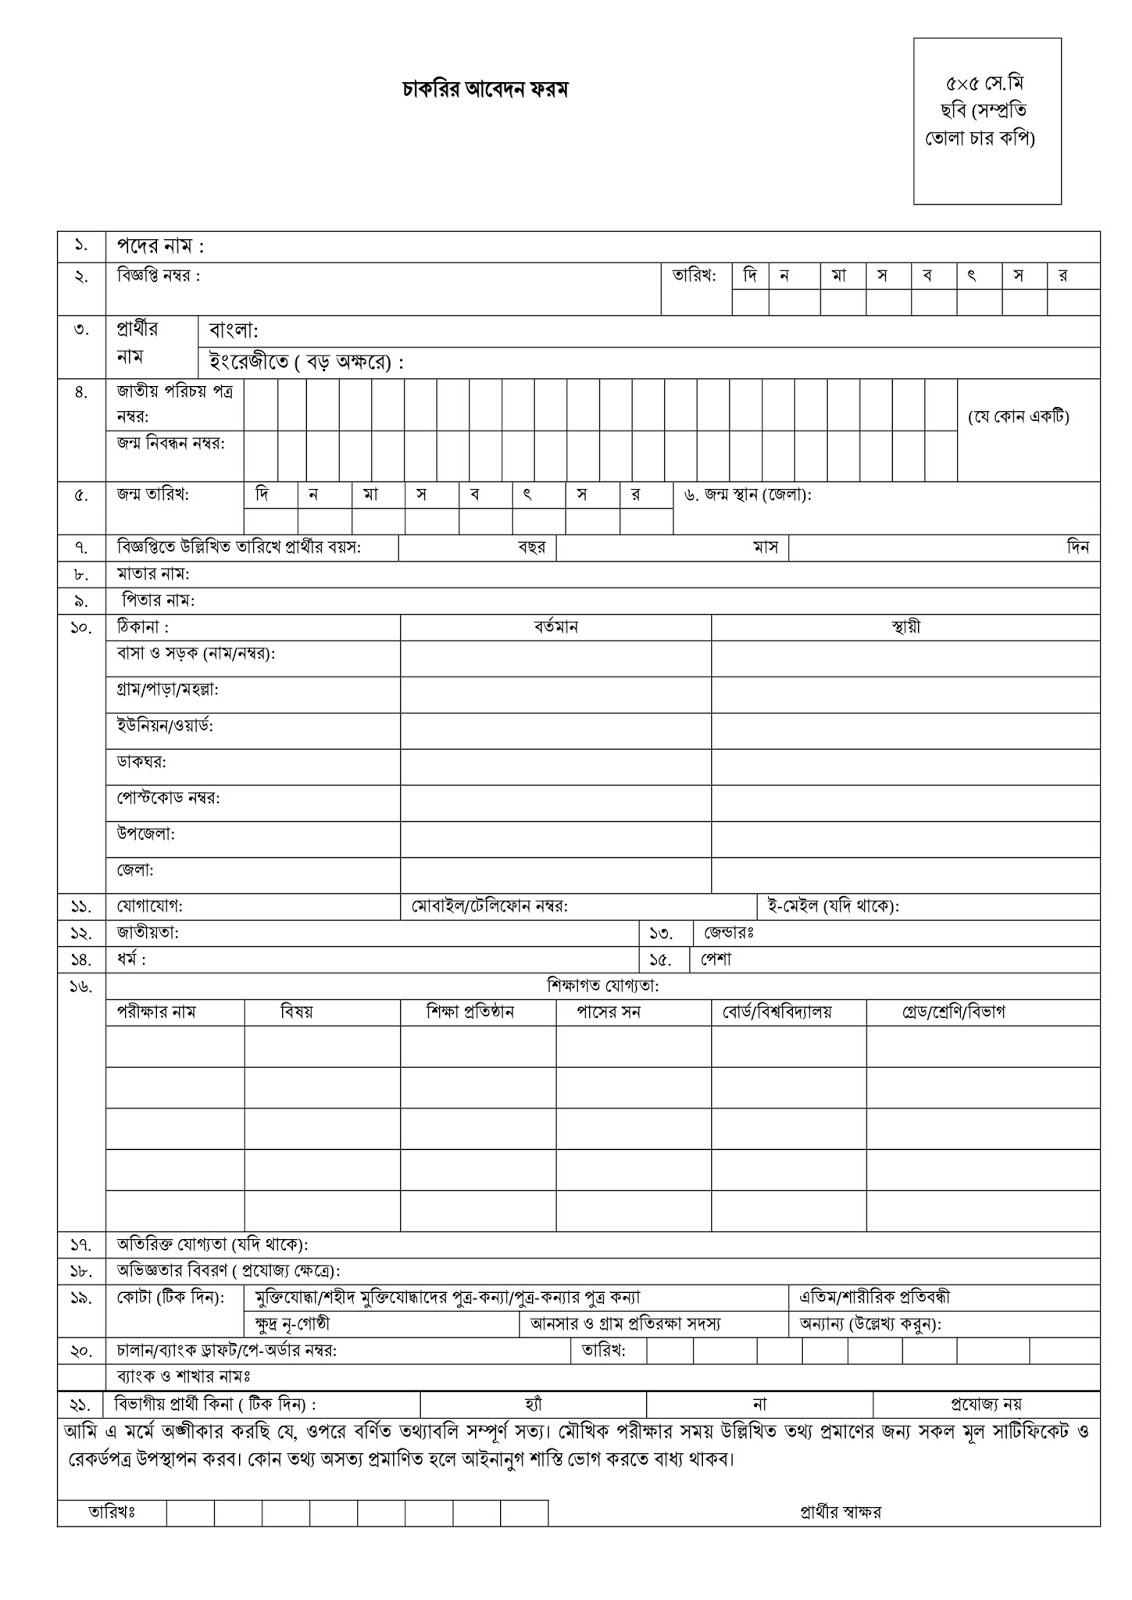 Zila Parishad Tangail Job Application Form